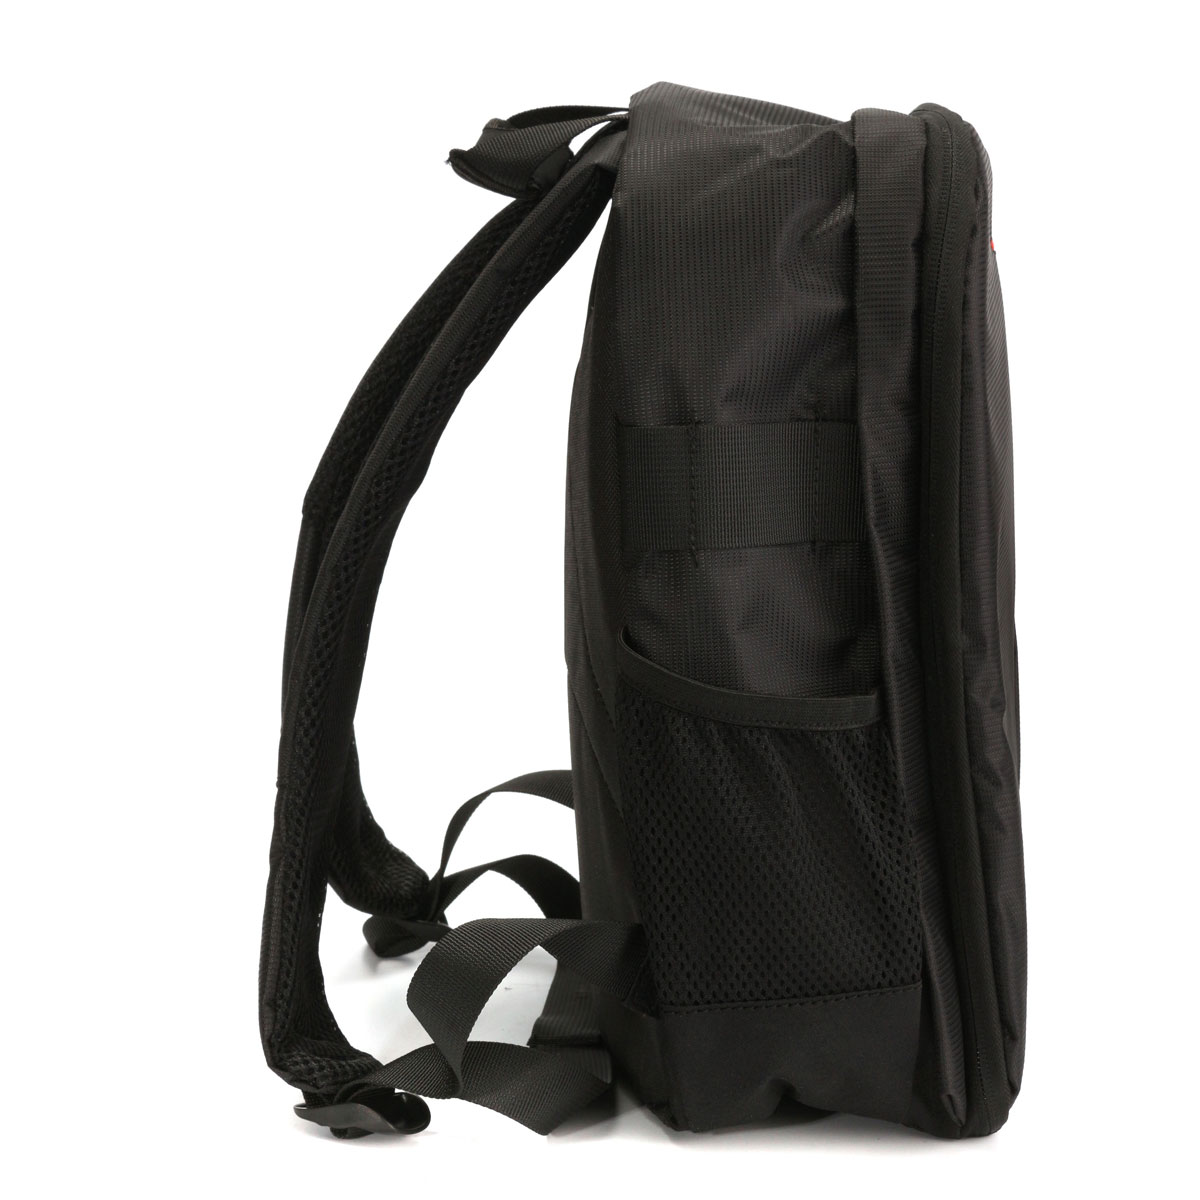 DL-B018 Waterproof Backpack Rucksack Case Bag for DSLR Caerma 13